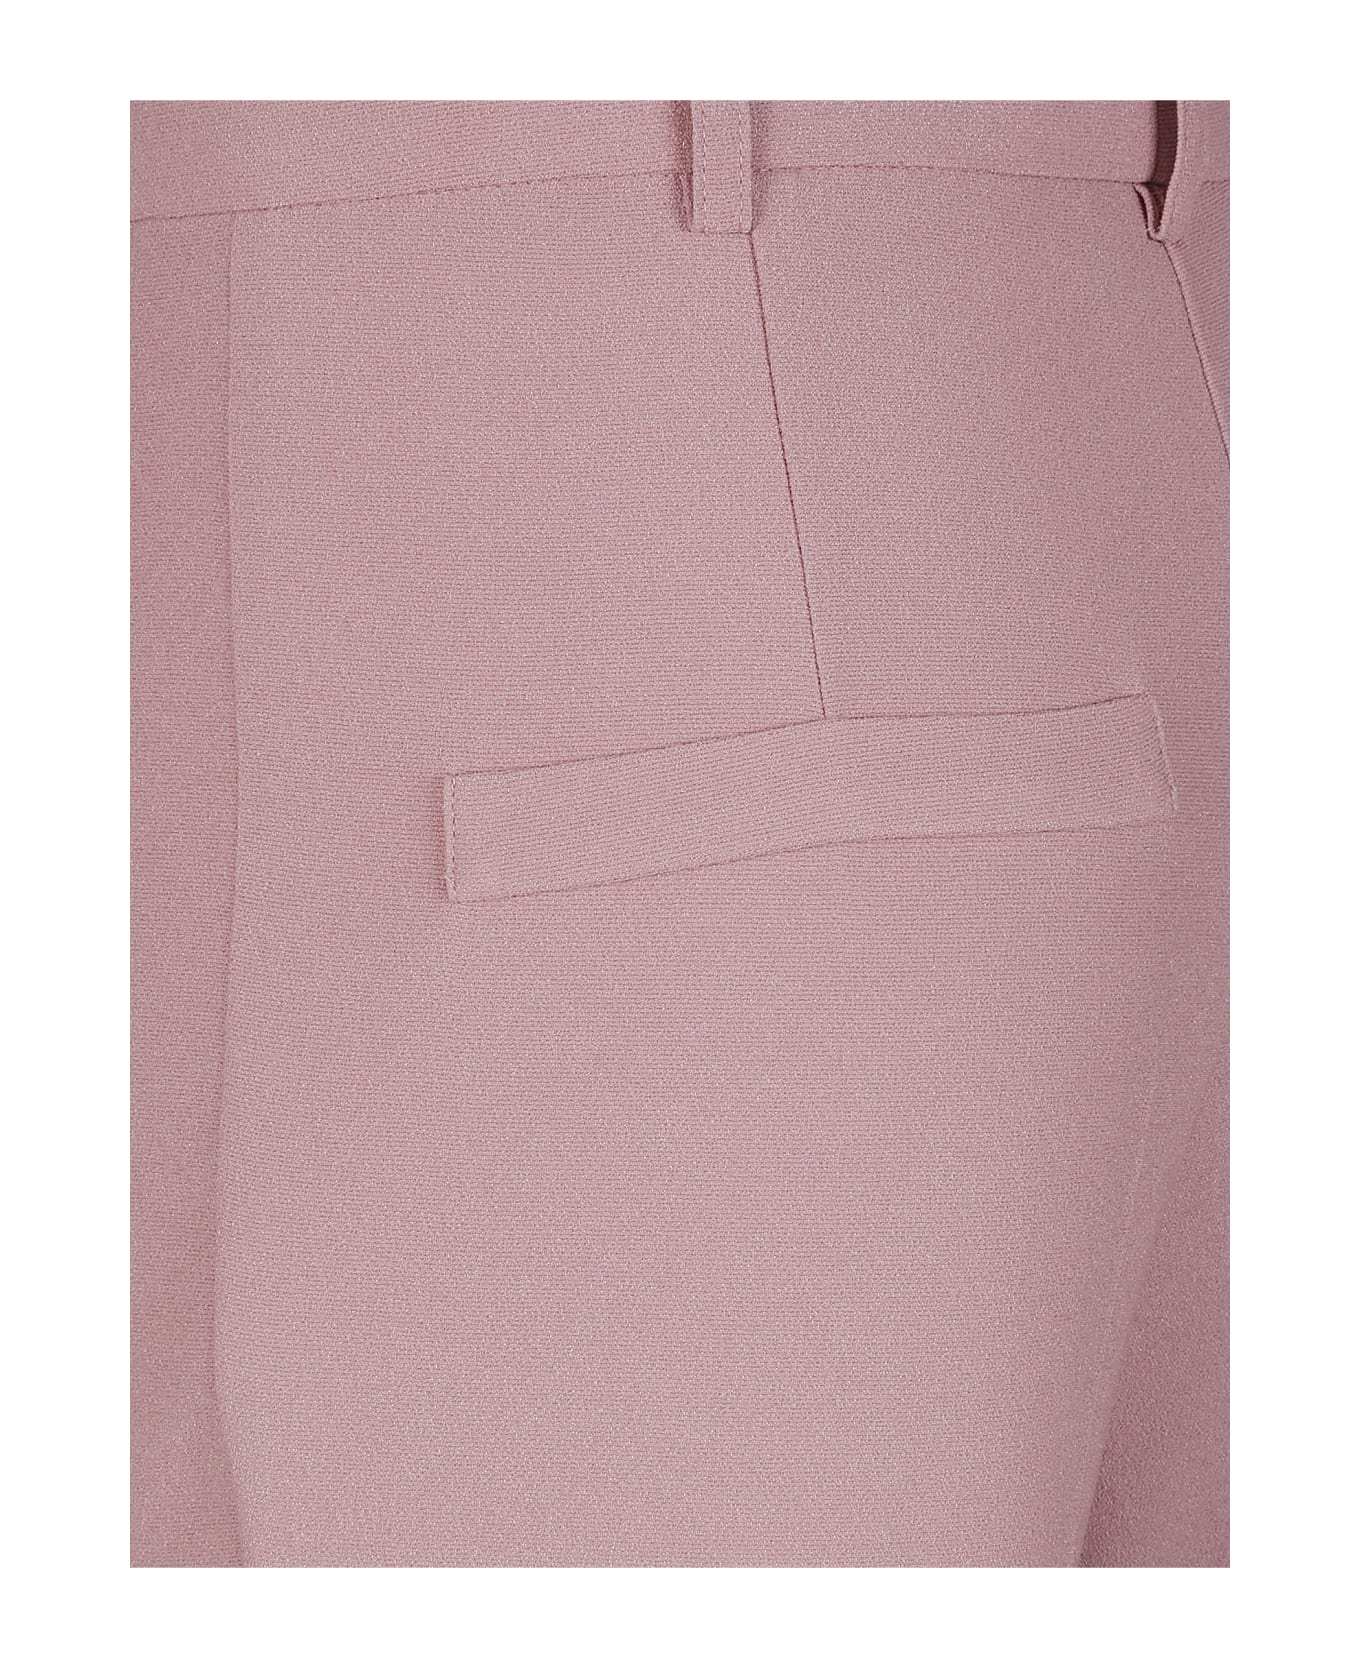 Hebe Studio Trousers Pink - Powder ボトムス